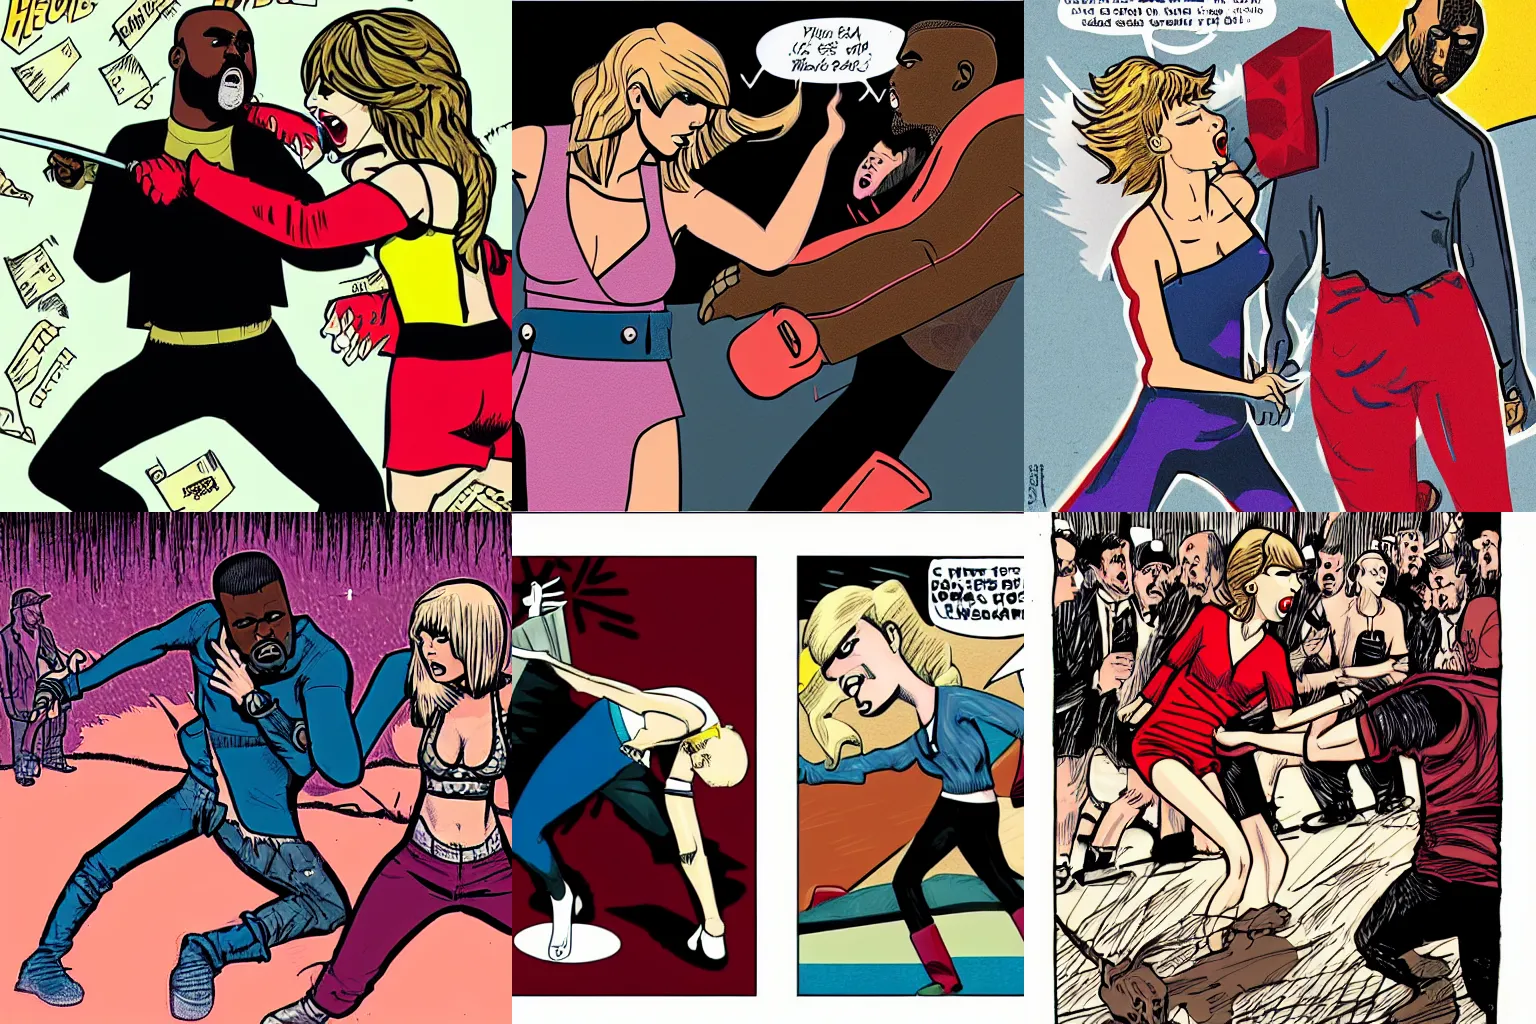 Prompt: A comic book illustration by John Higgins showing Taylor Swift fighting Kanye West